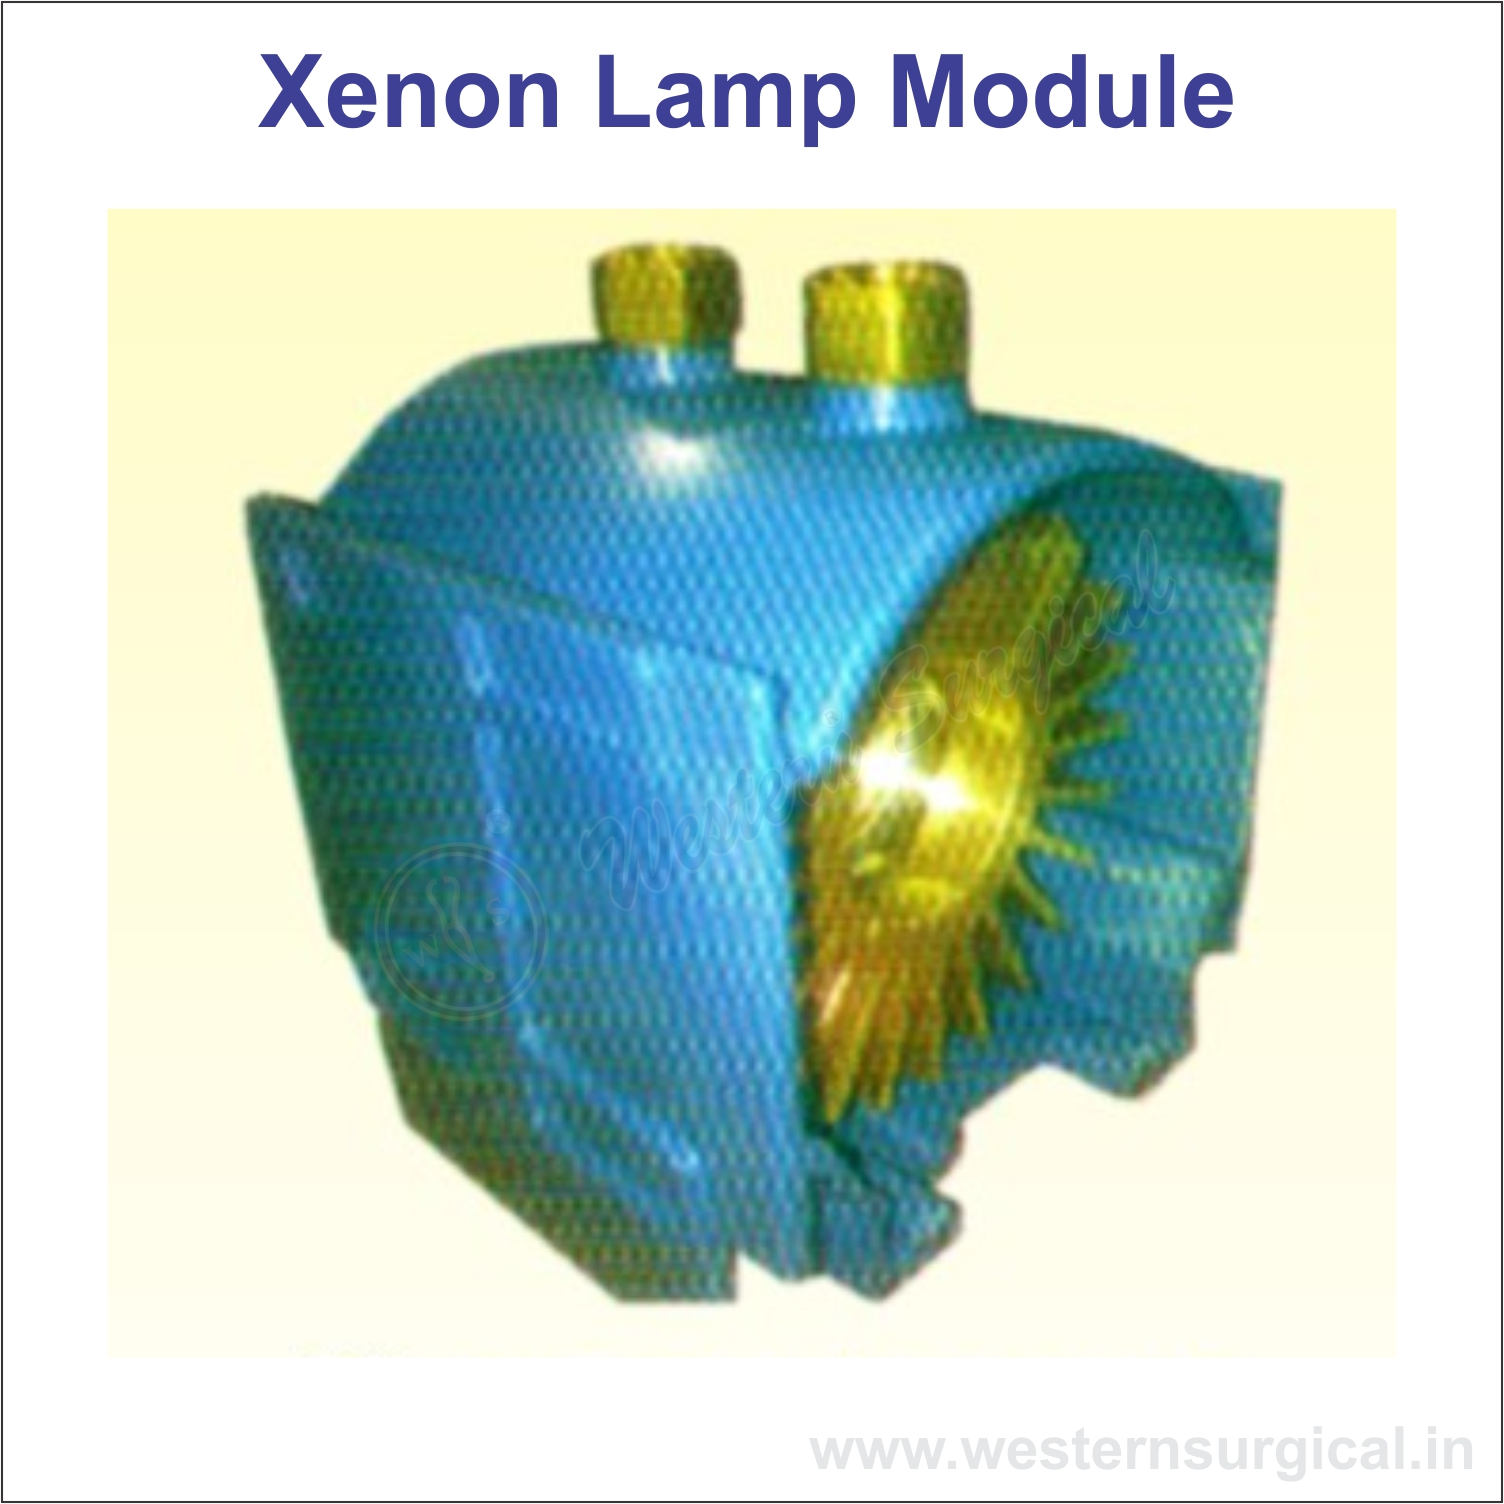 Xenon Lamp Module